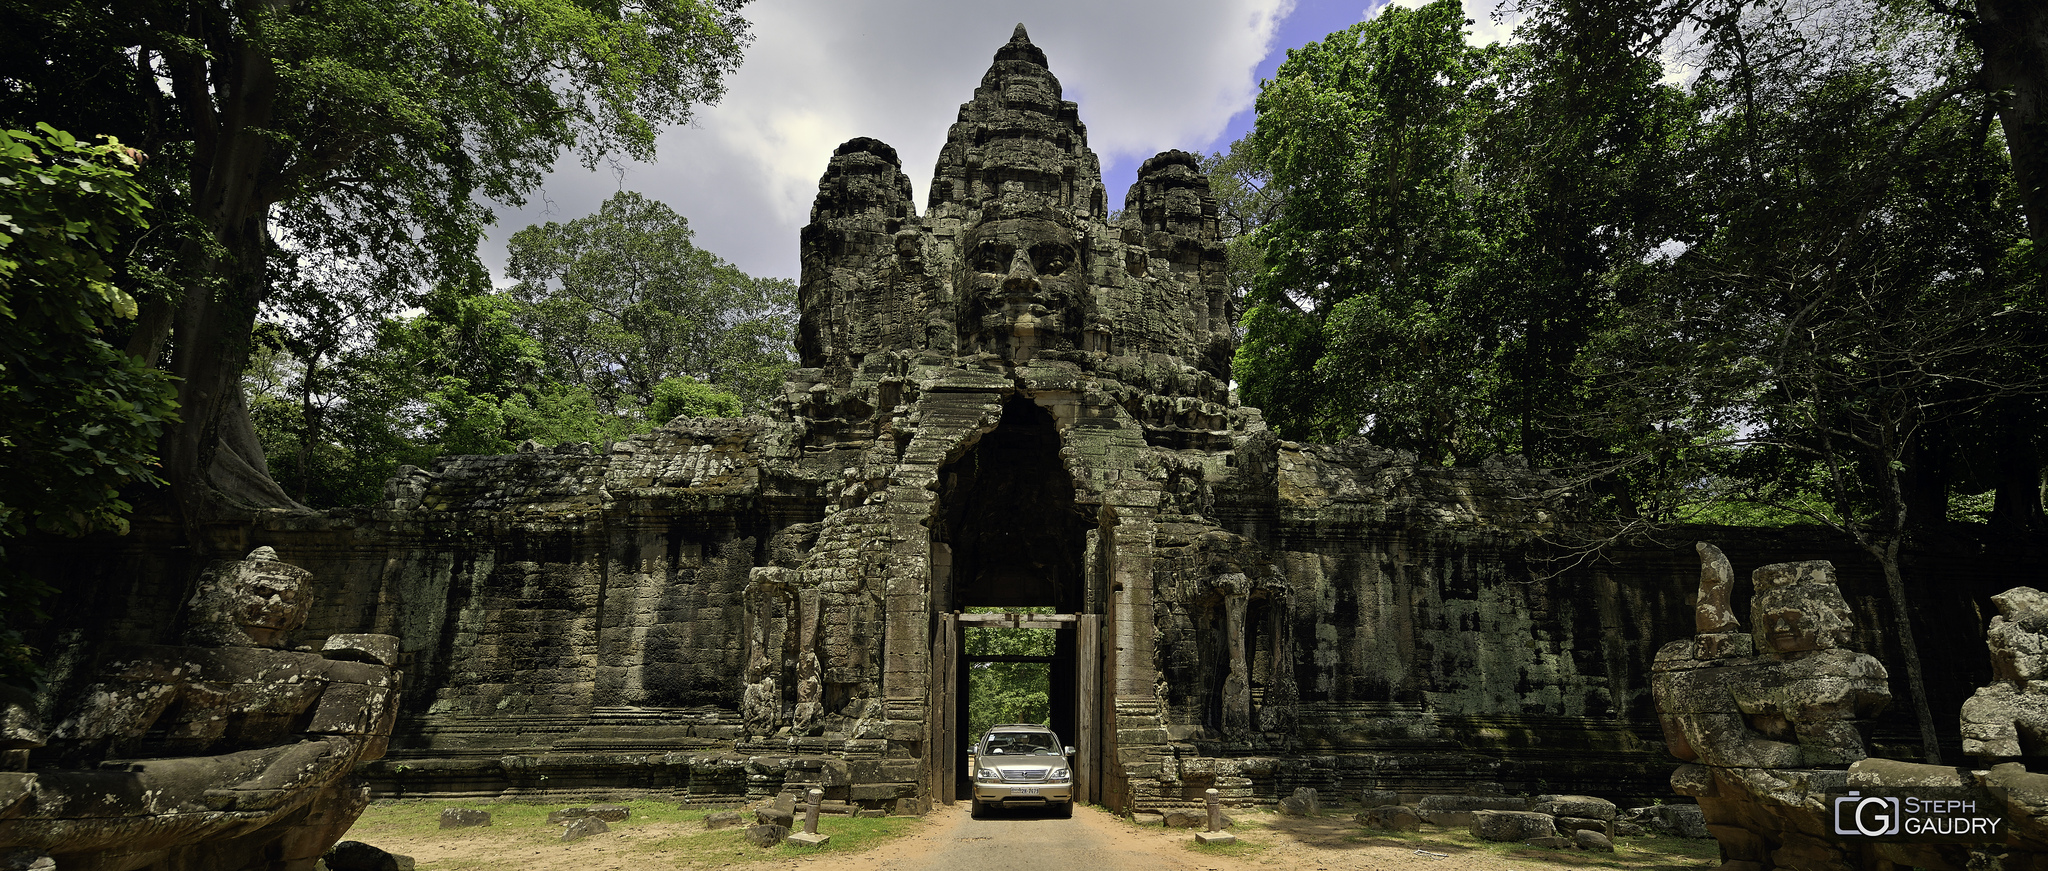 La porte de la victoire, en direction d'Angkor Tom [Klicken Sie hier, um die Diashow zu starten]